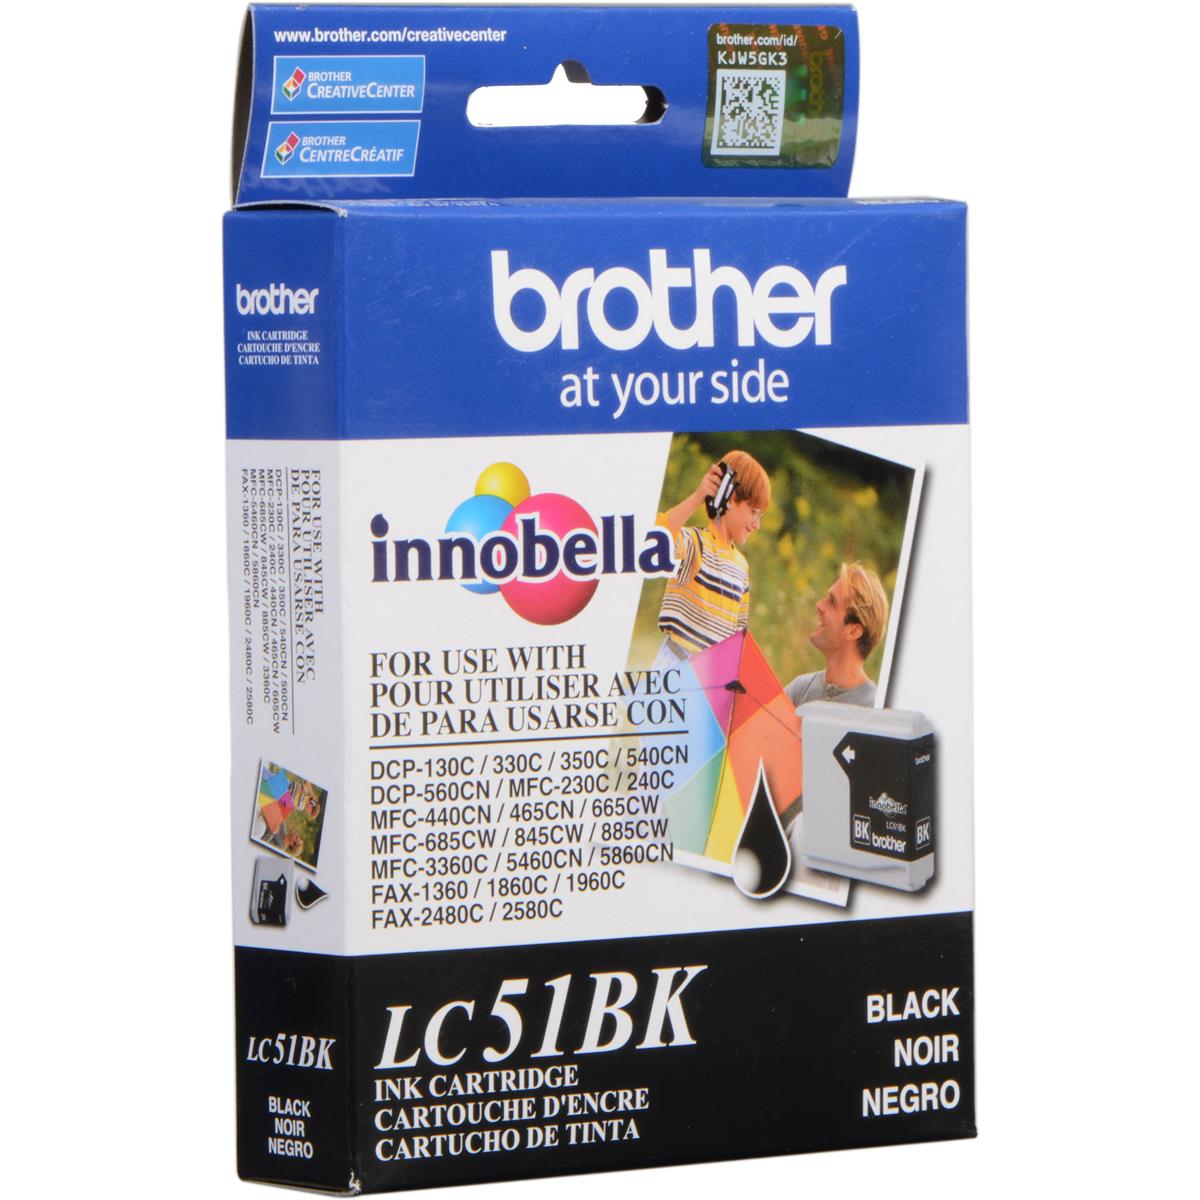 

Brother LC51BK Black Ink Cartridge